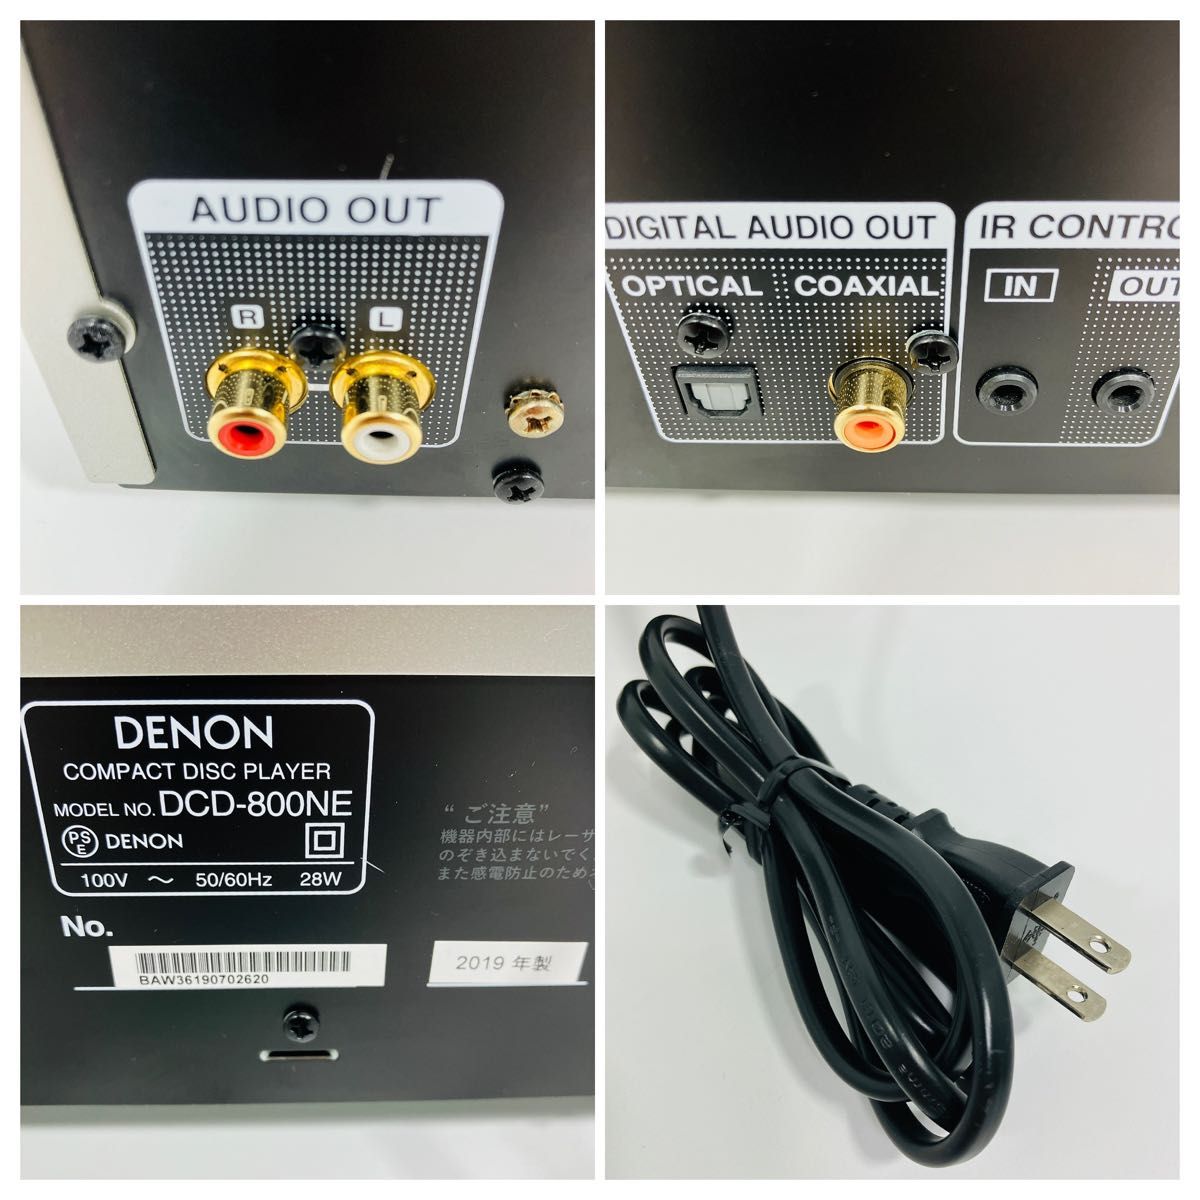 Denon デノン DCD-800NE ハイ・パフォーマンスCDプレーヤー プレミアムシルバー DCD-800NESP USB